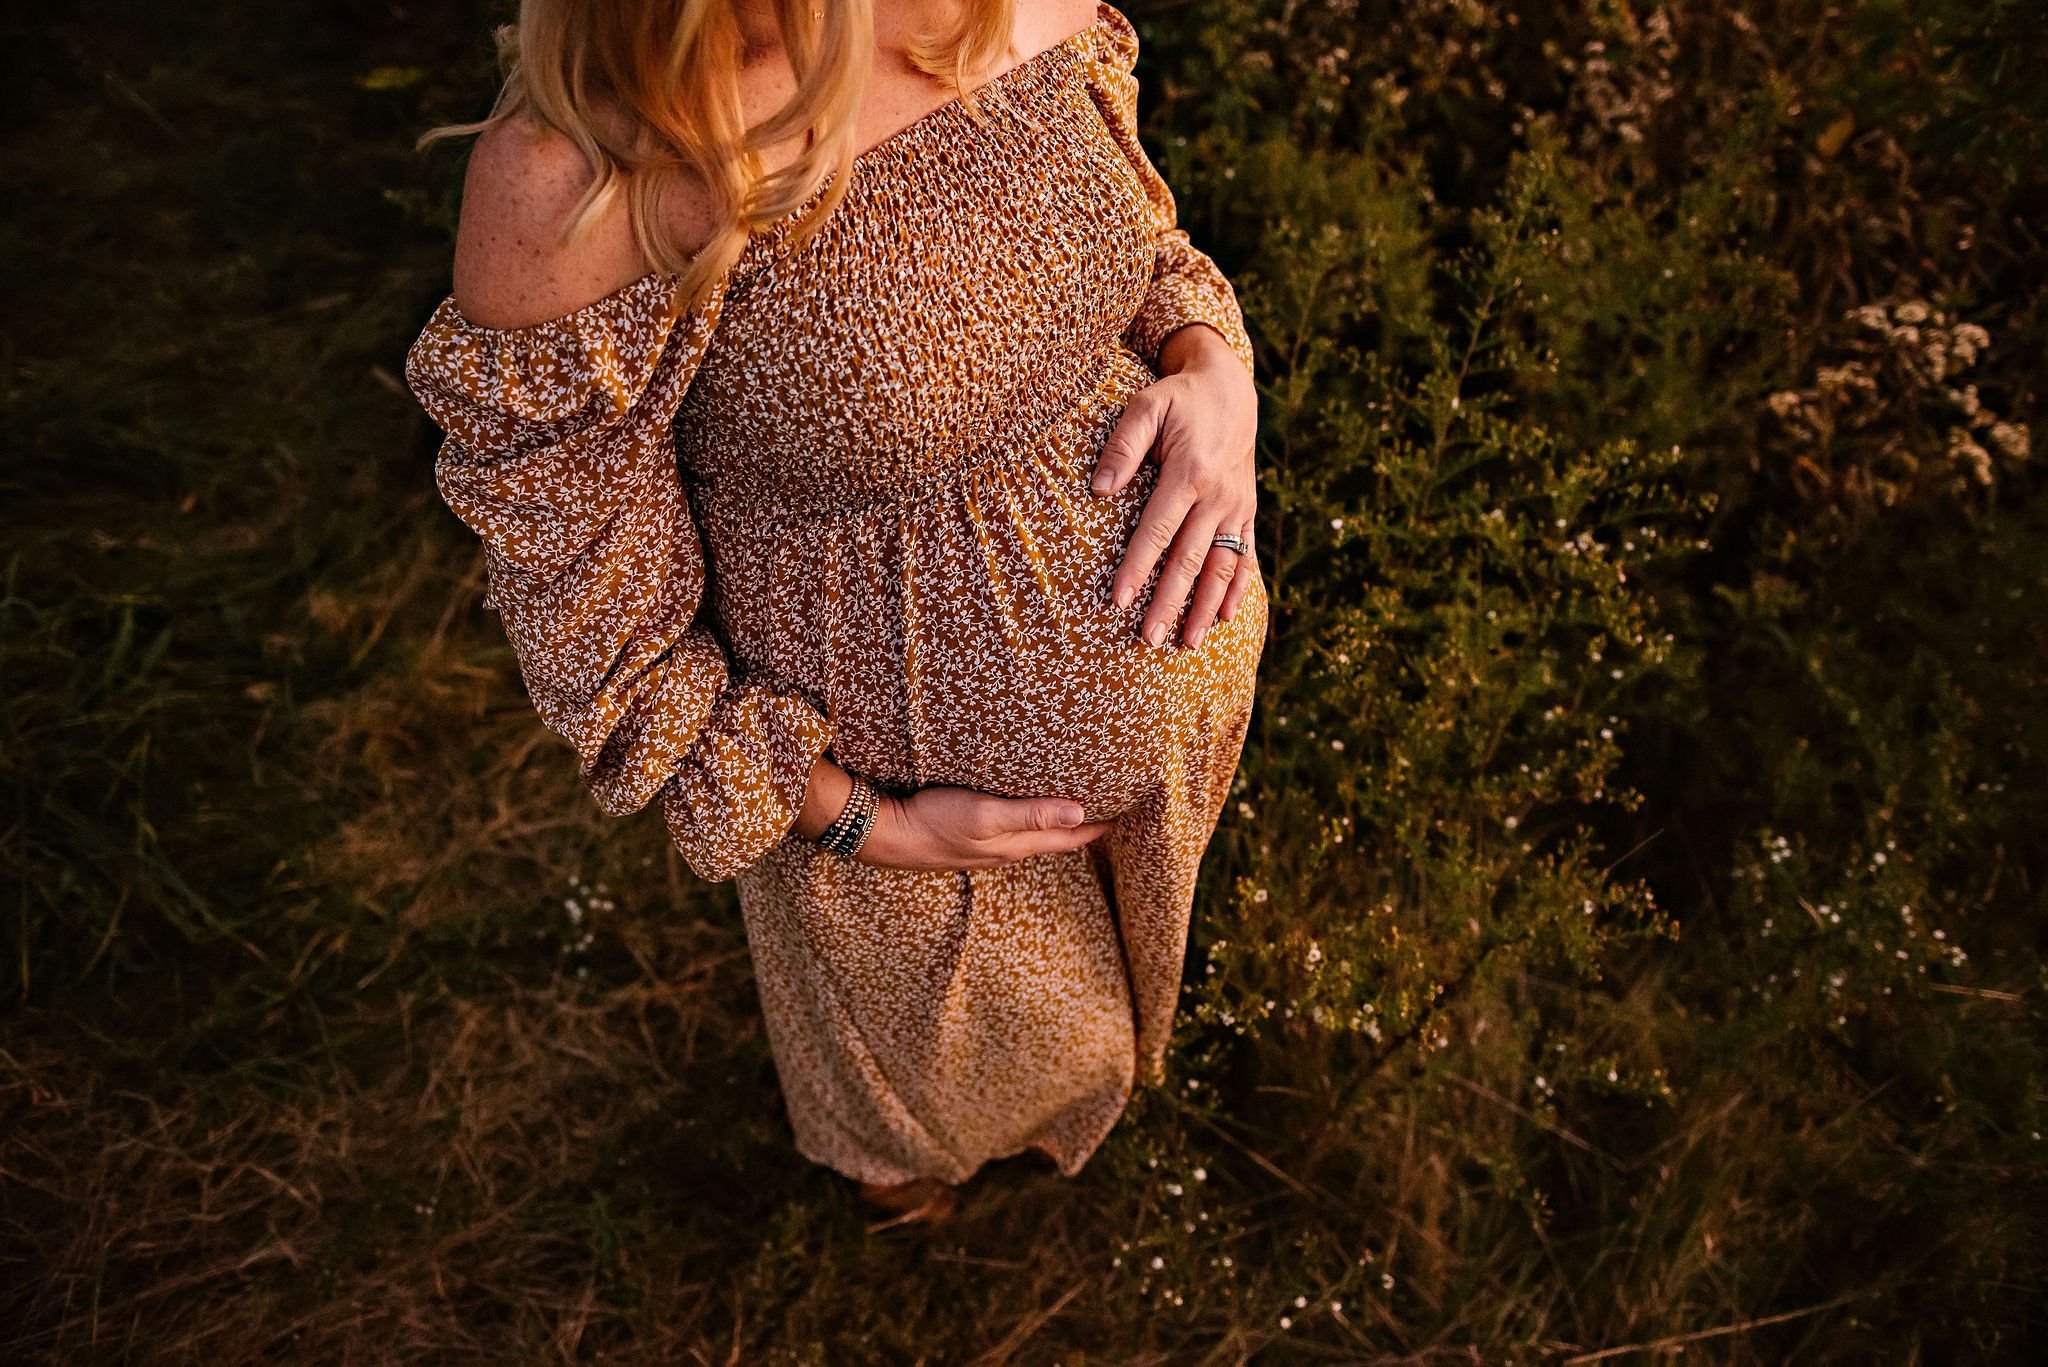 canton-ohio-photographer-family-maternity-outdoor-sunset-lauren-grayson-photography-14.jpeg